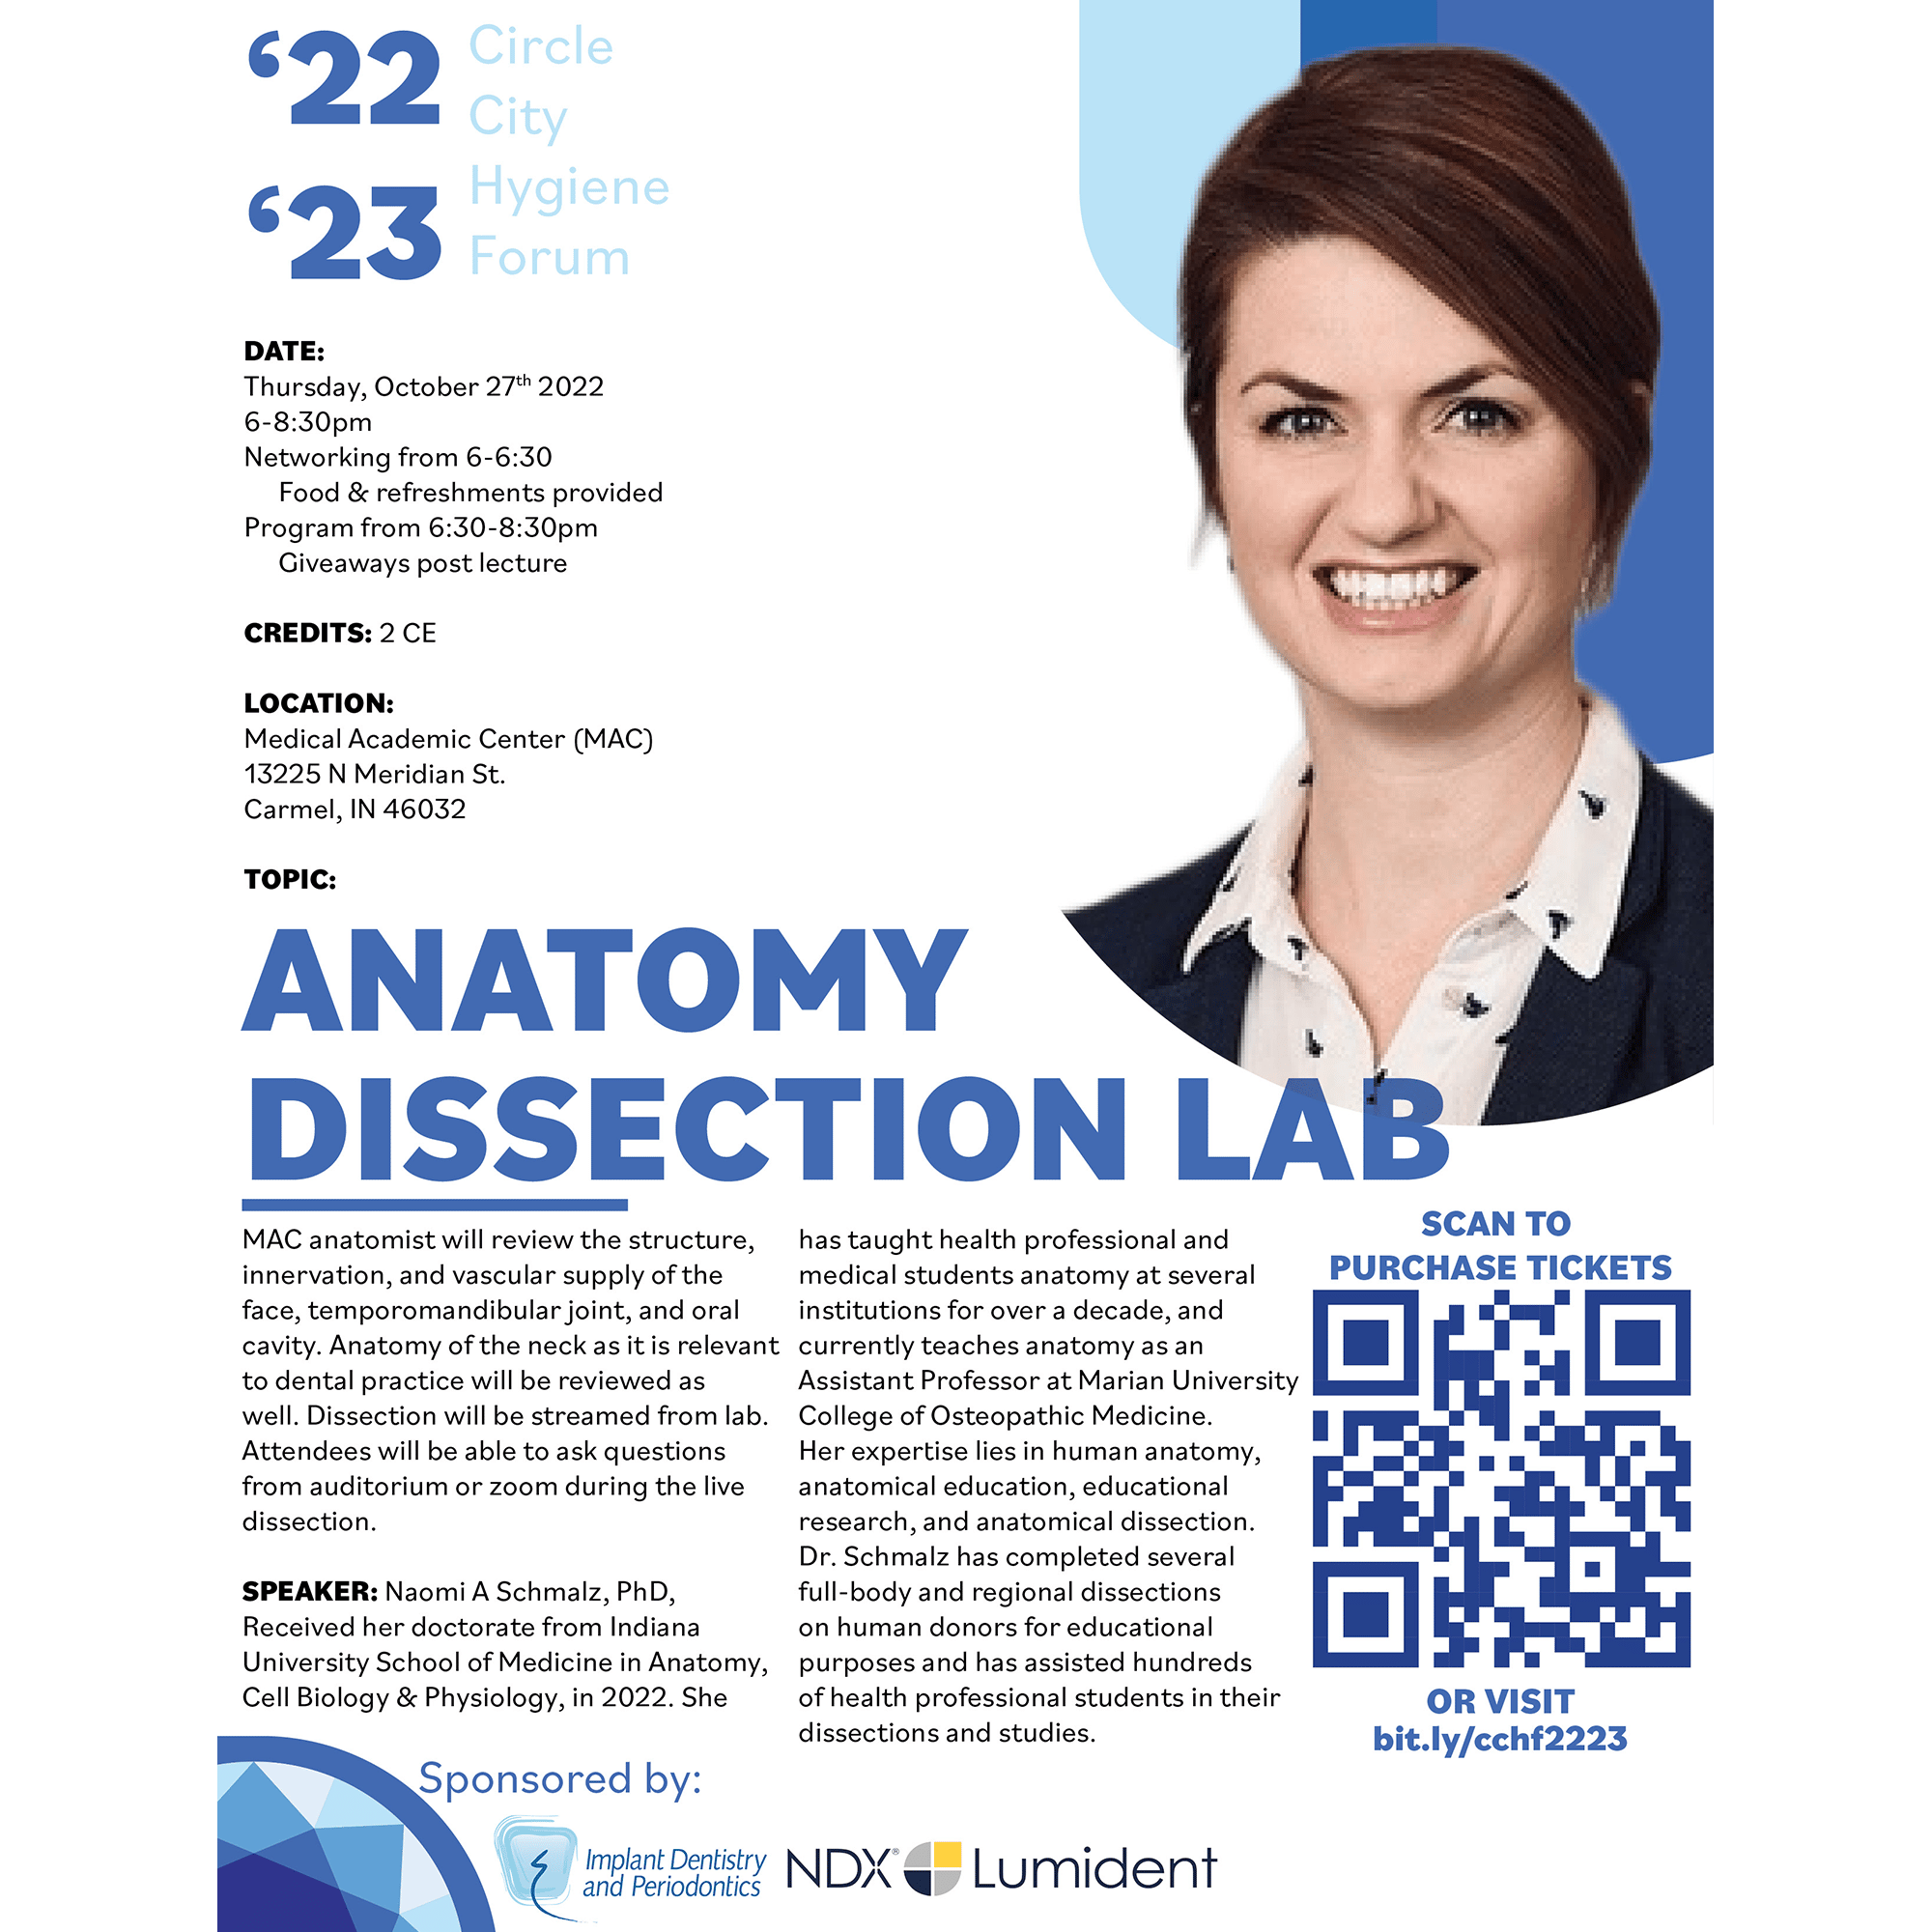 02 - Oct 27 Anatomy Dissection Lab